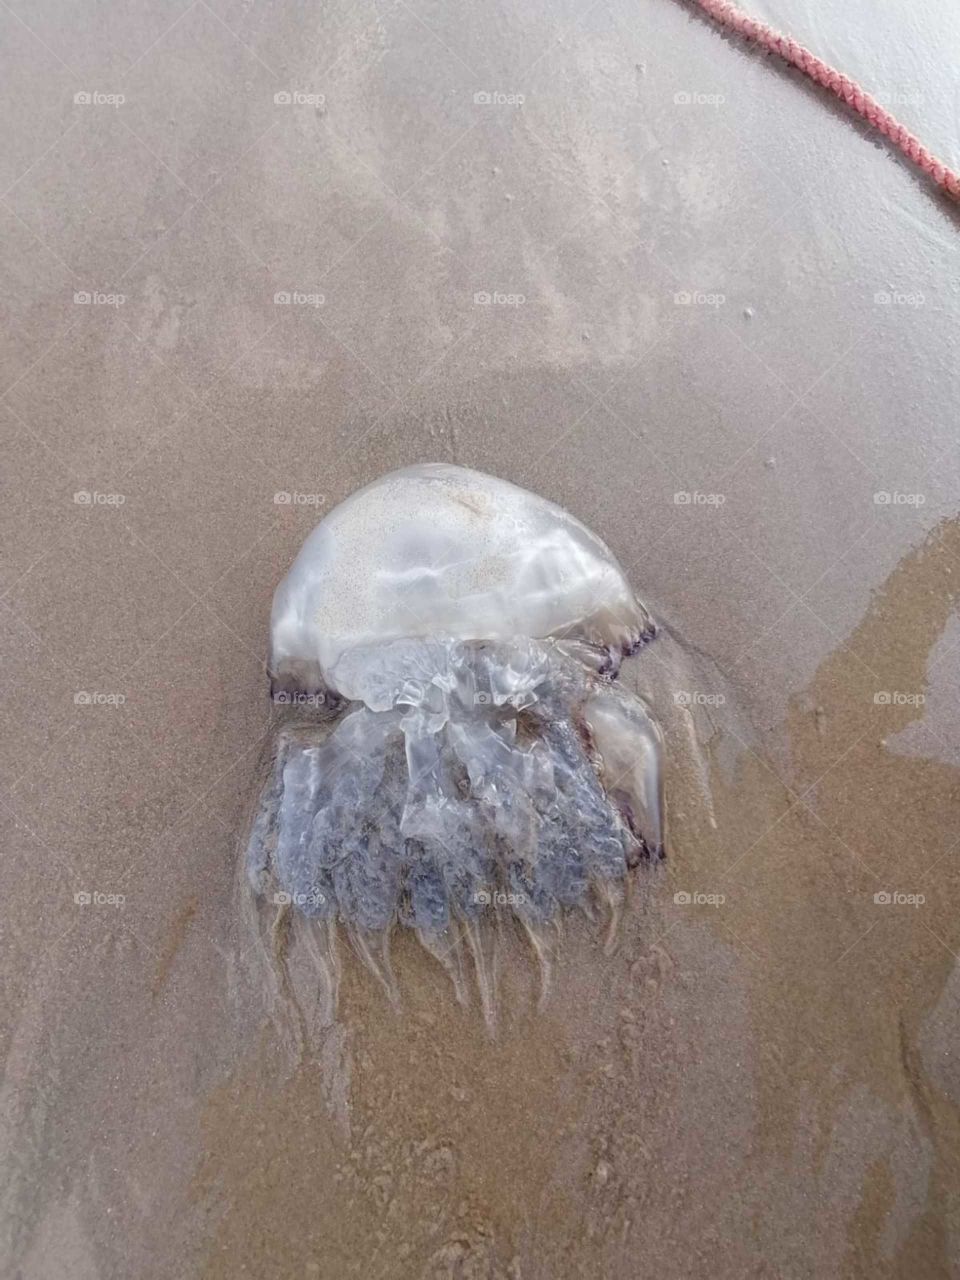 jellyfish!!!